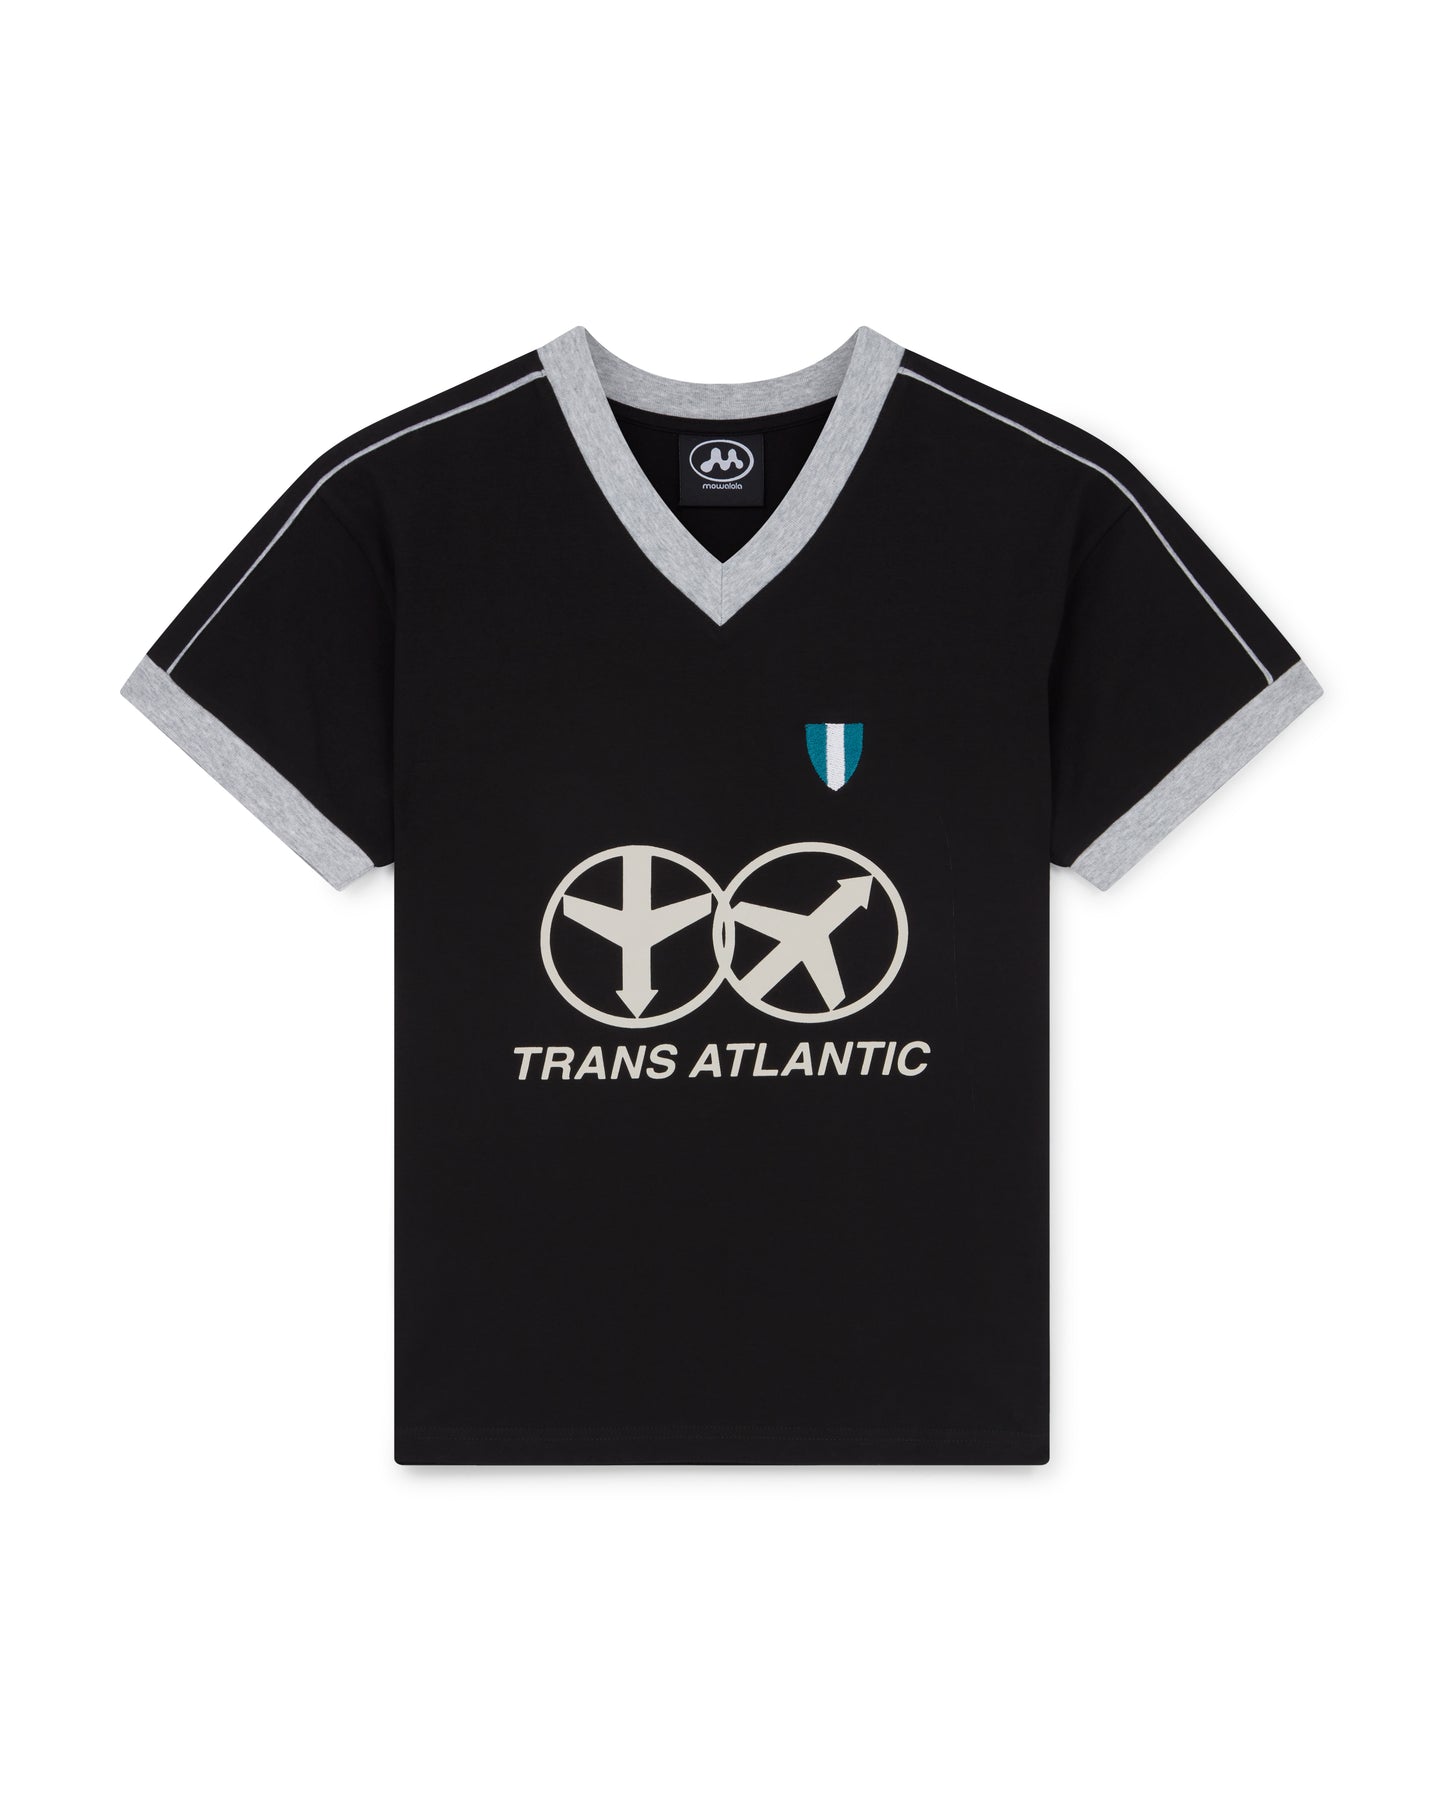 Trans Atlantic T-shirt